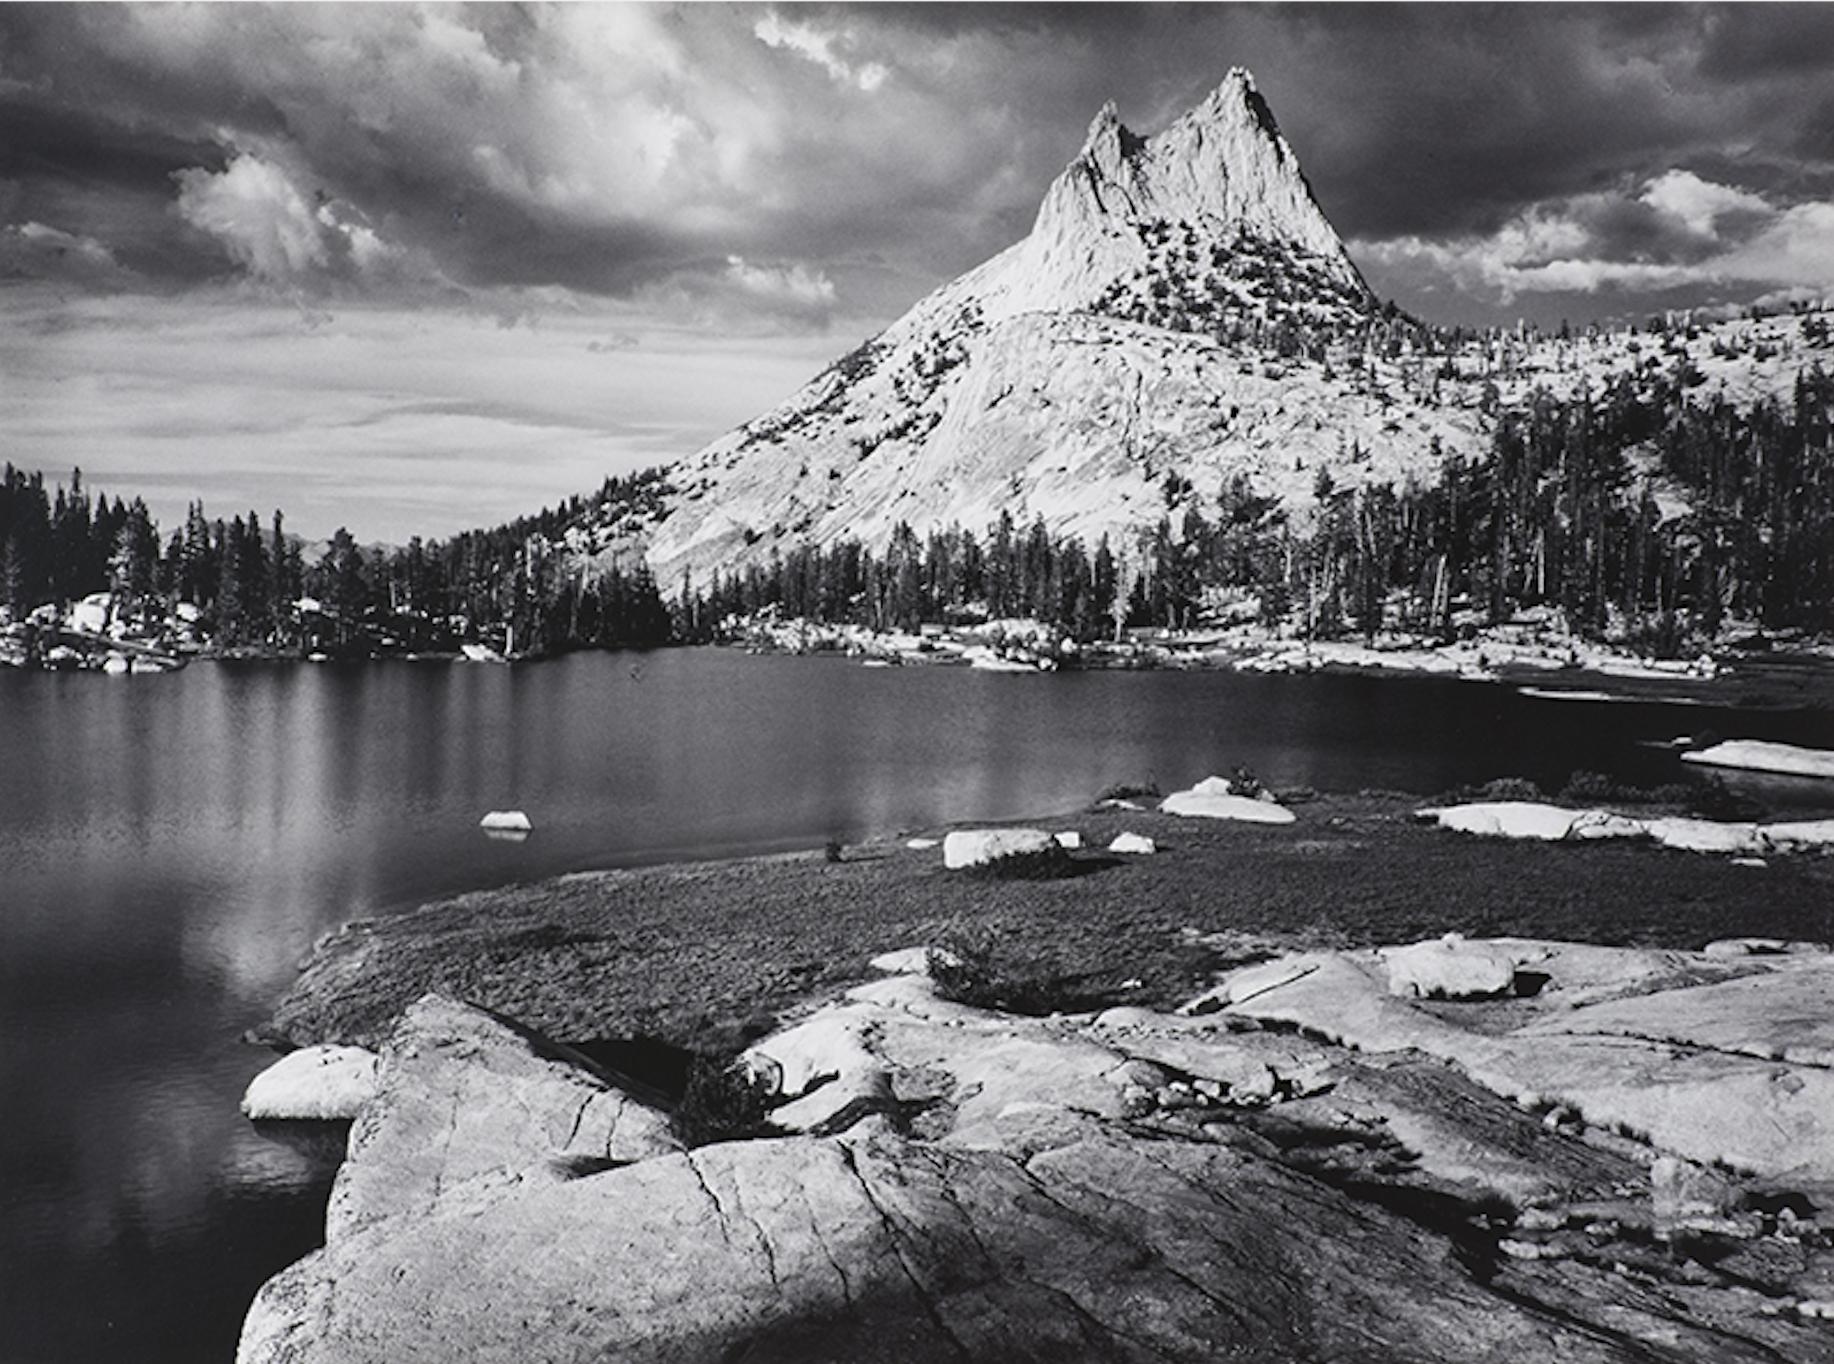 Ansel Adams Landscape Photograph - Cathedral Peak and Lake, Yosemite National Park, CA